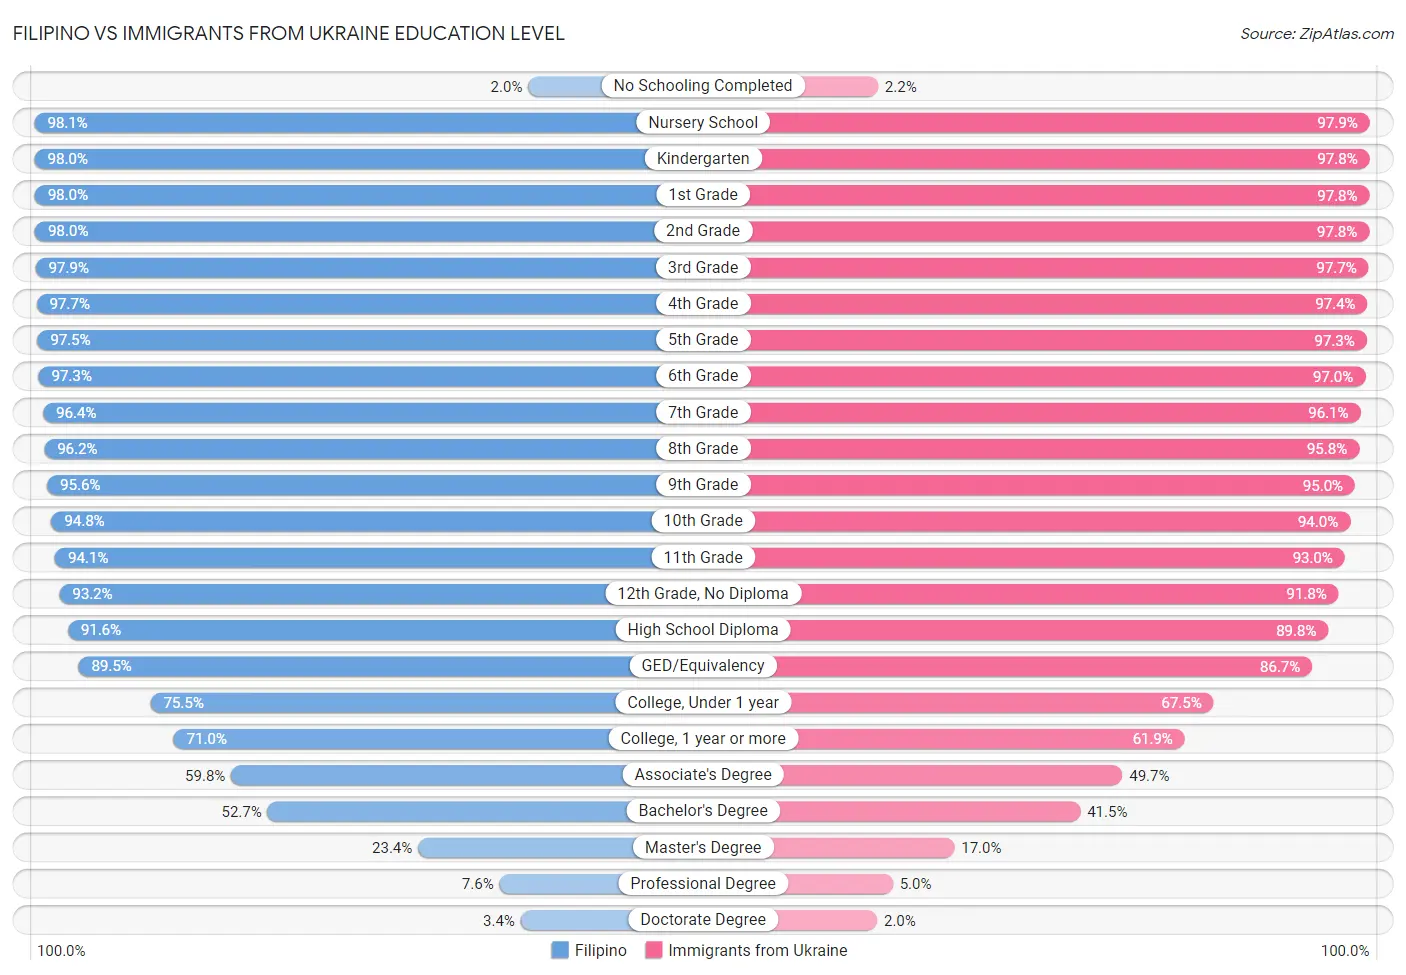 Filipino vs Immigrants from Ukraine Education Level